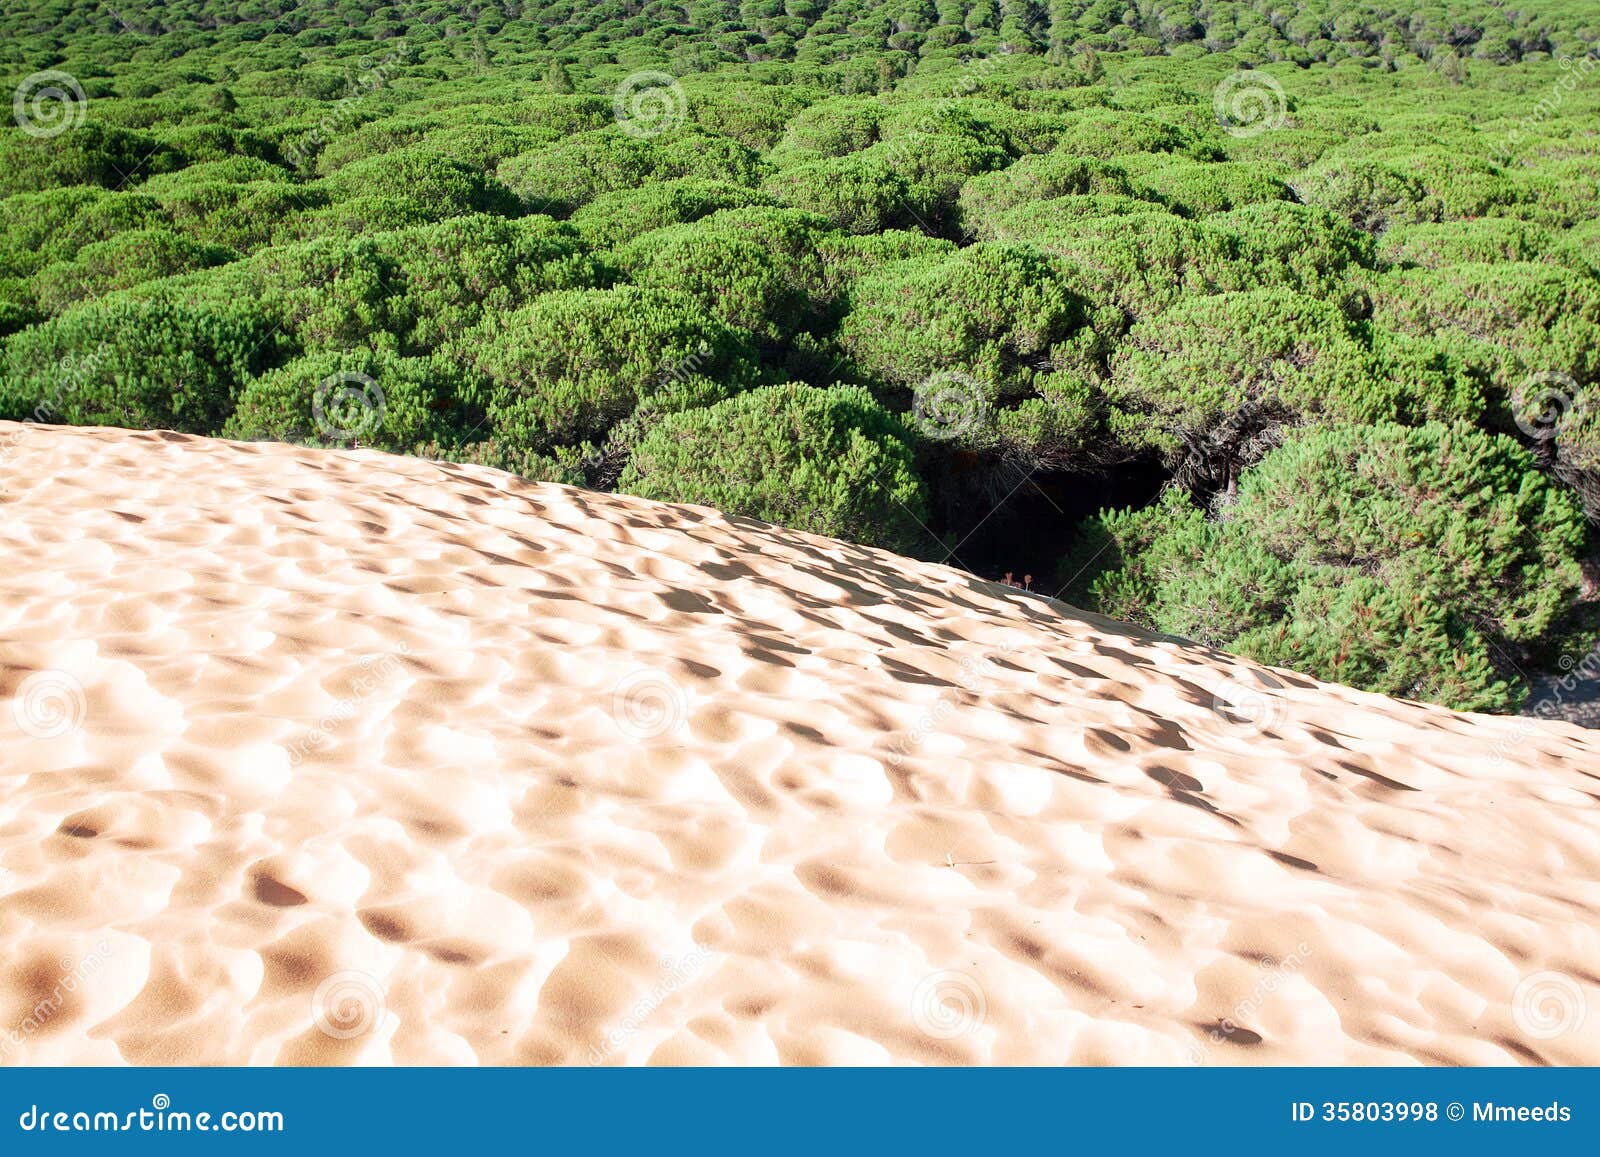 sand dune of bolonia beach, province cadiz, andalucia, spine